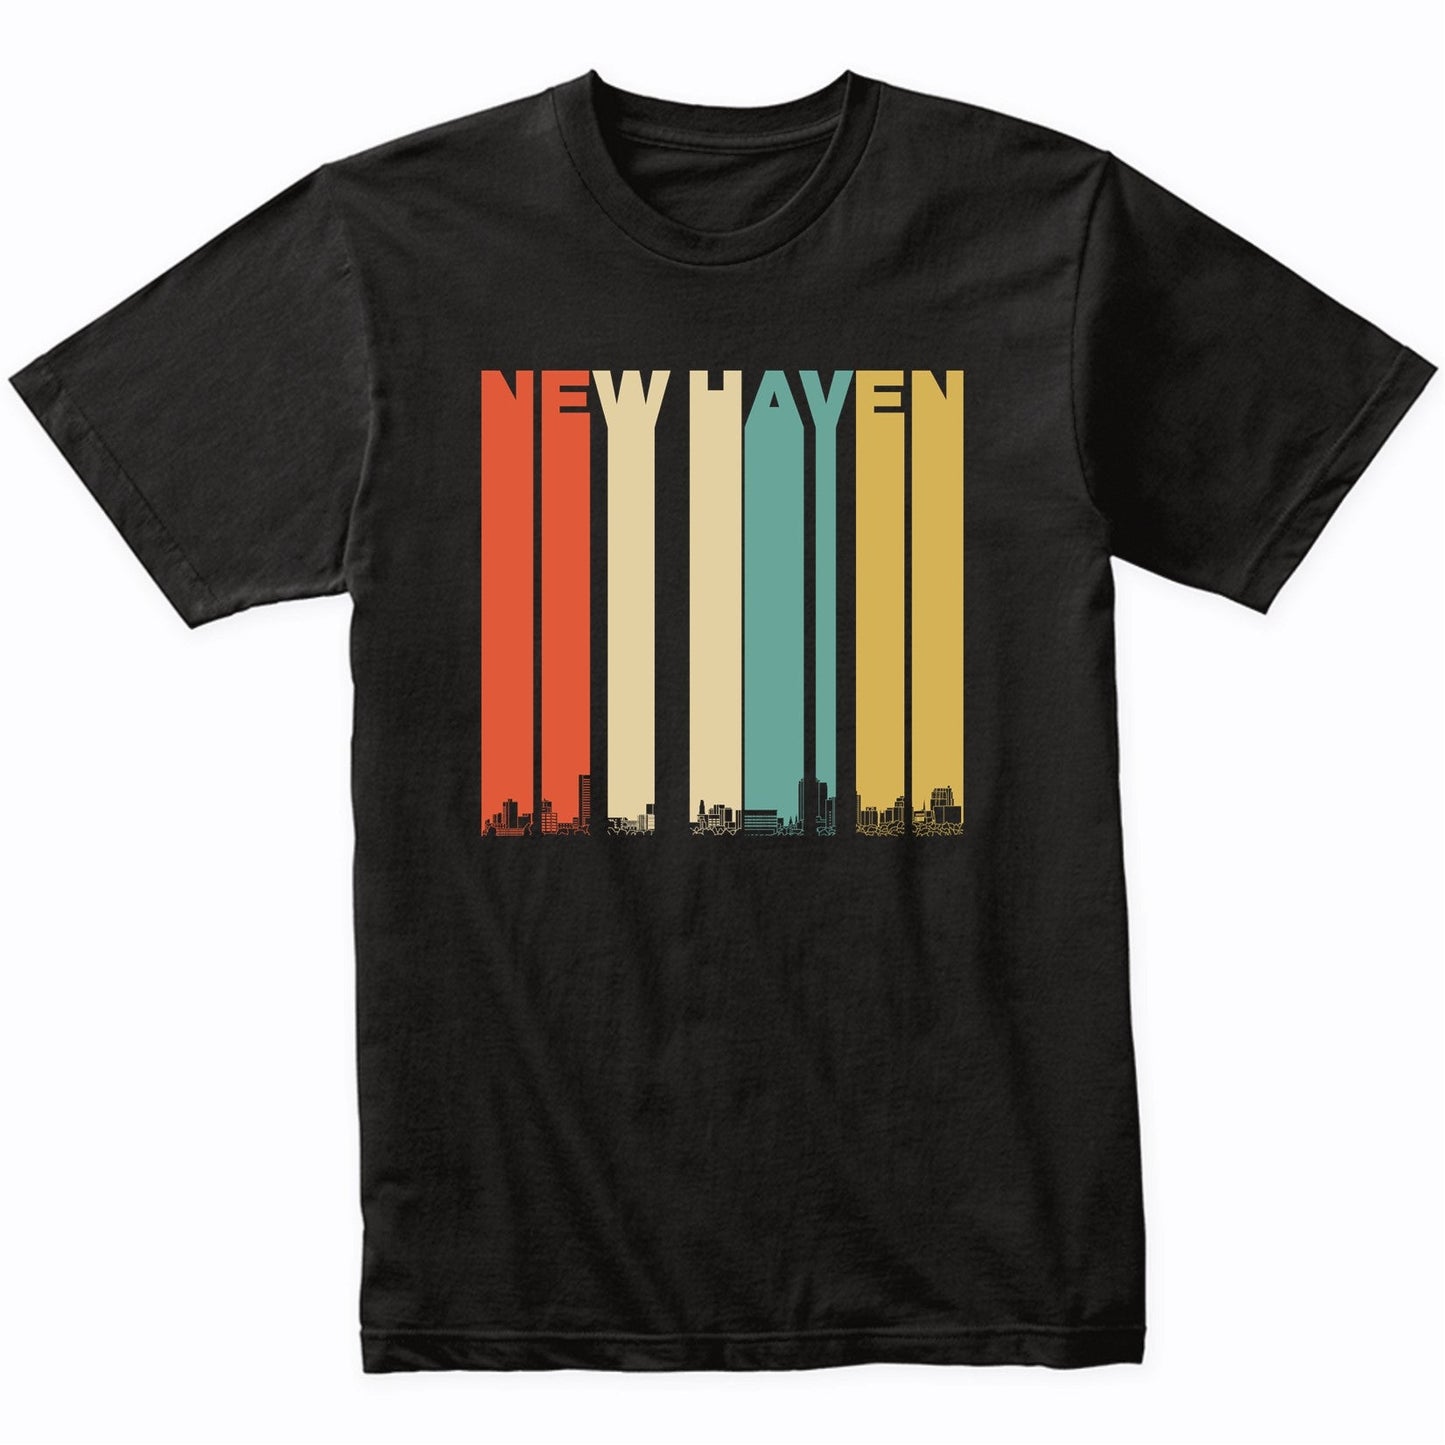 Vintage 1970's Style New Haven Connecticut Skyline T-Shirt